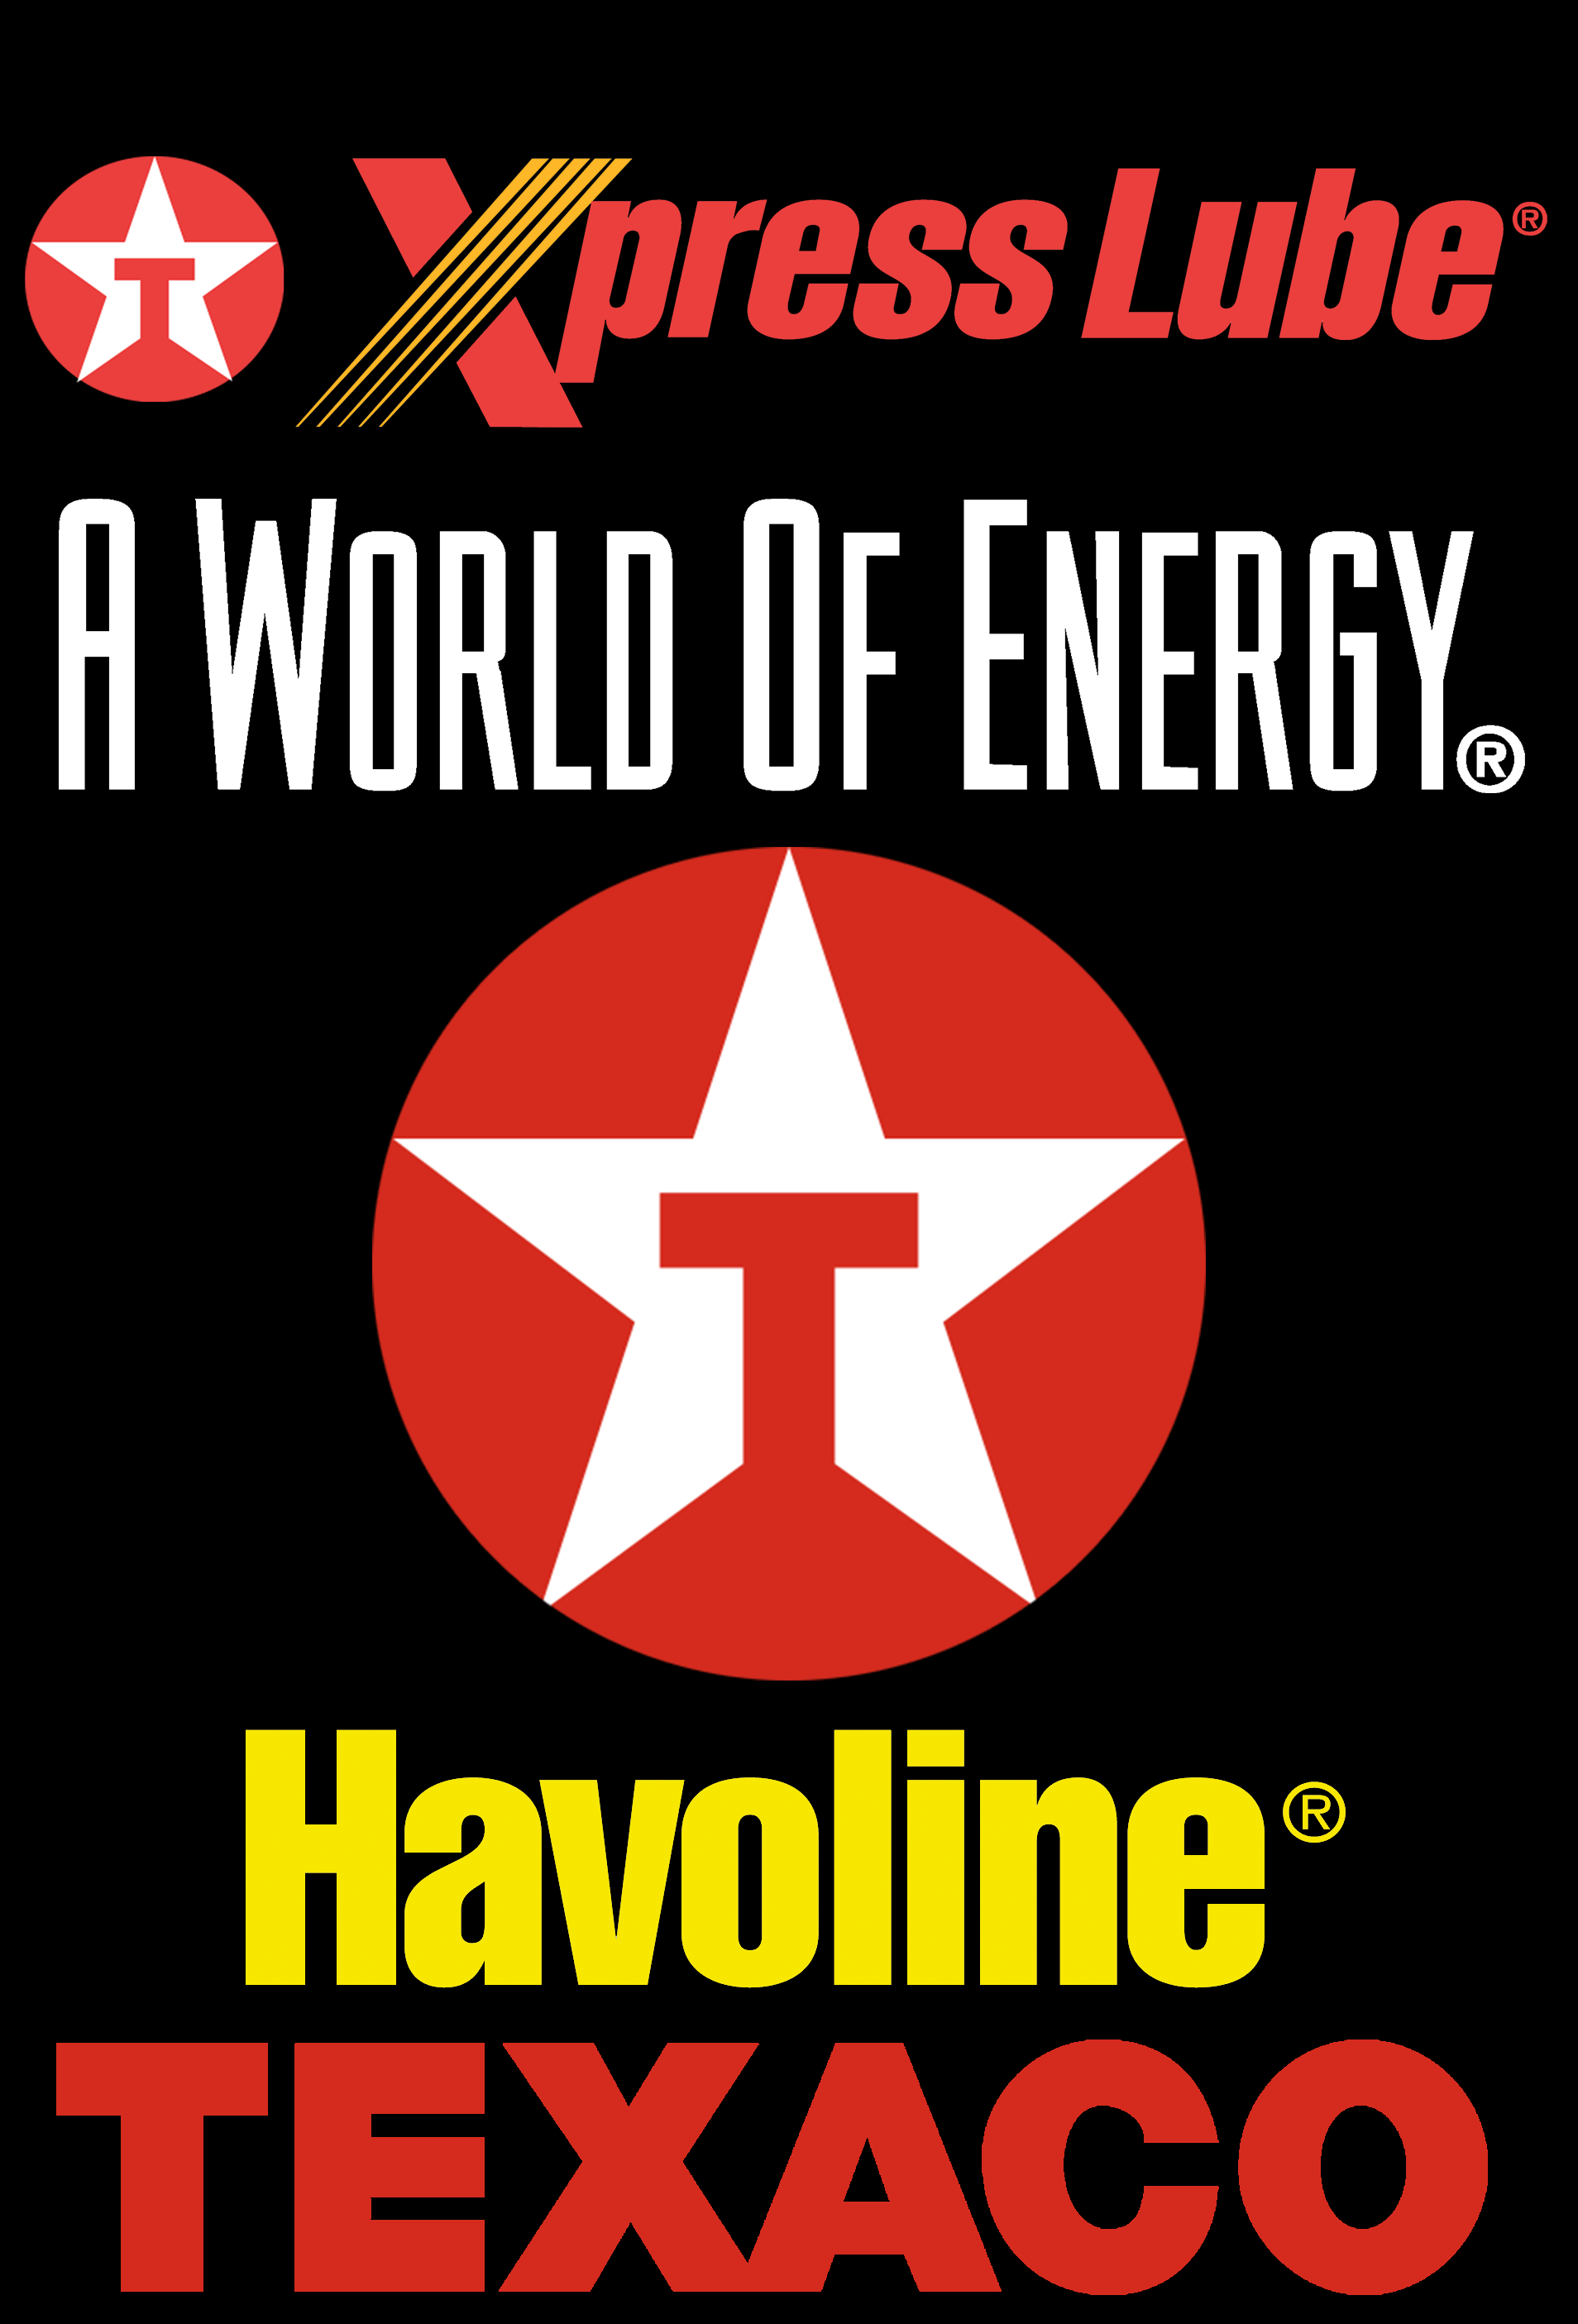 Kenny Irwin 1999 Texaco-Havoline logo sheet v2.png